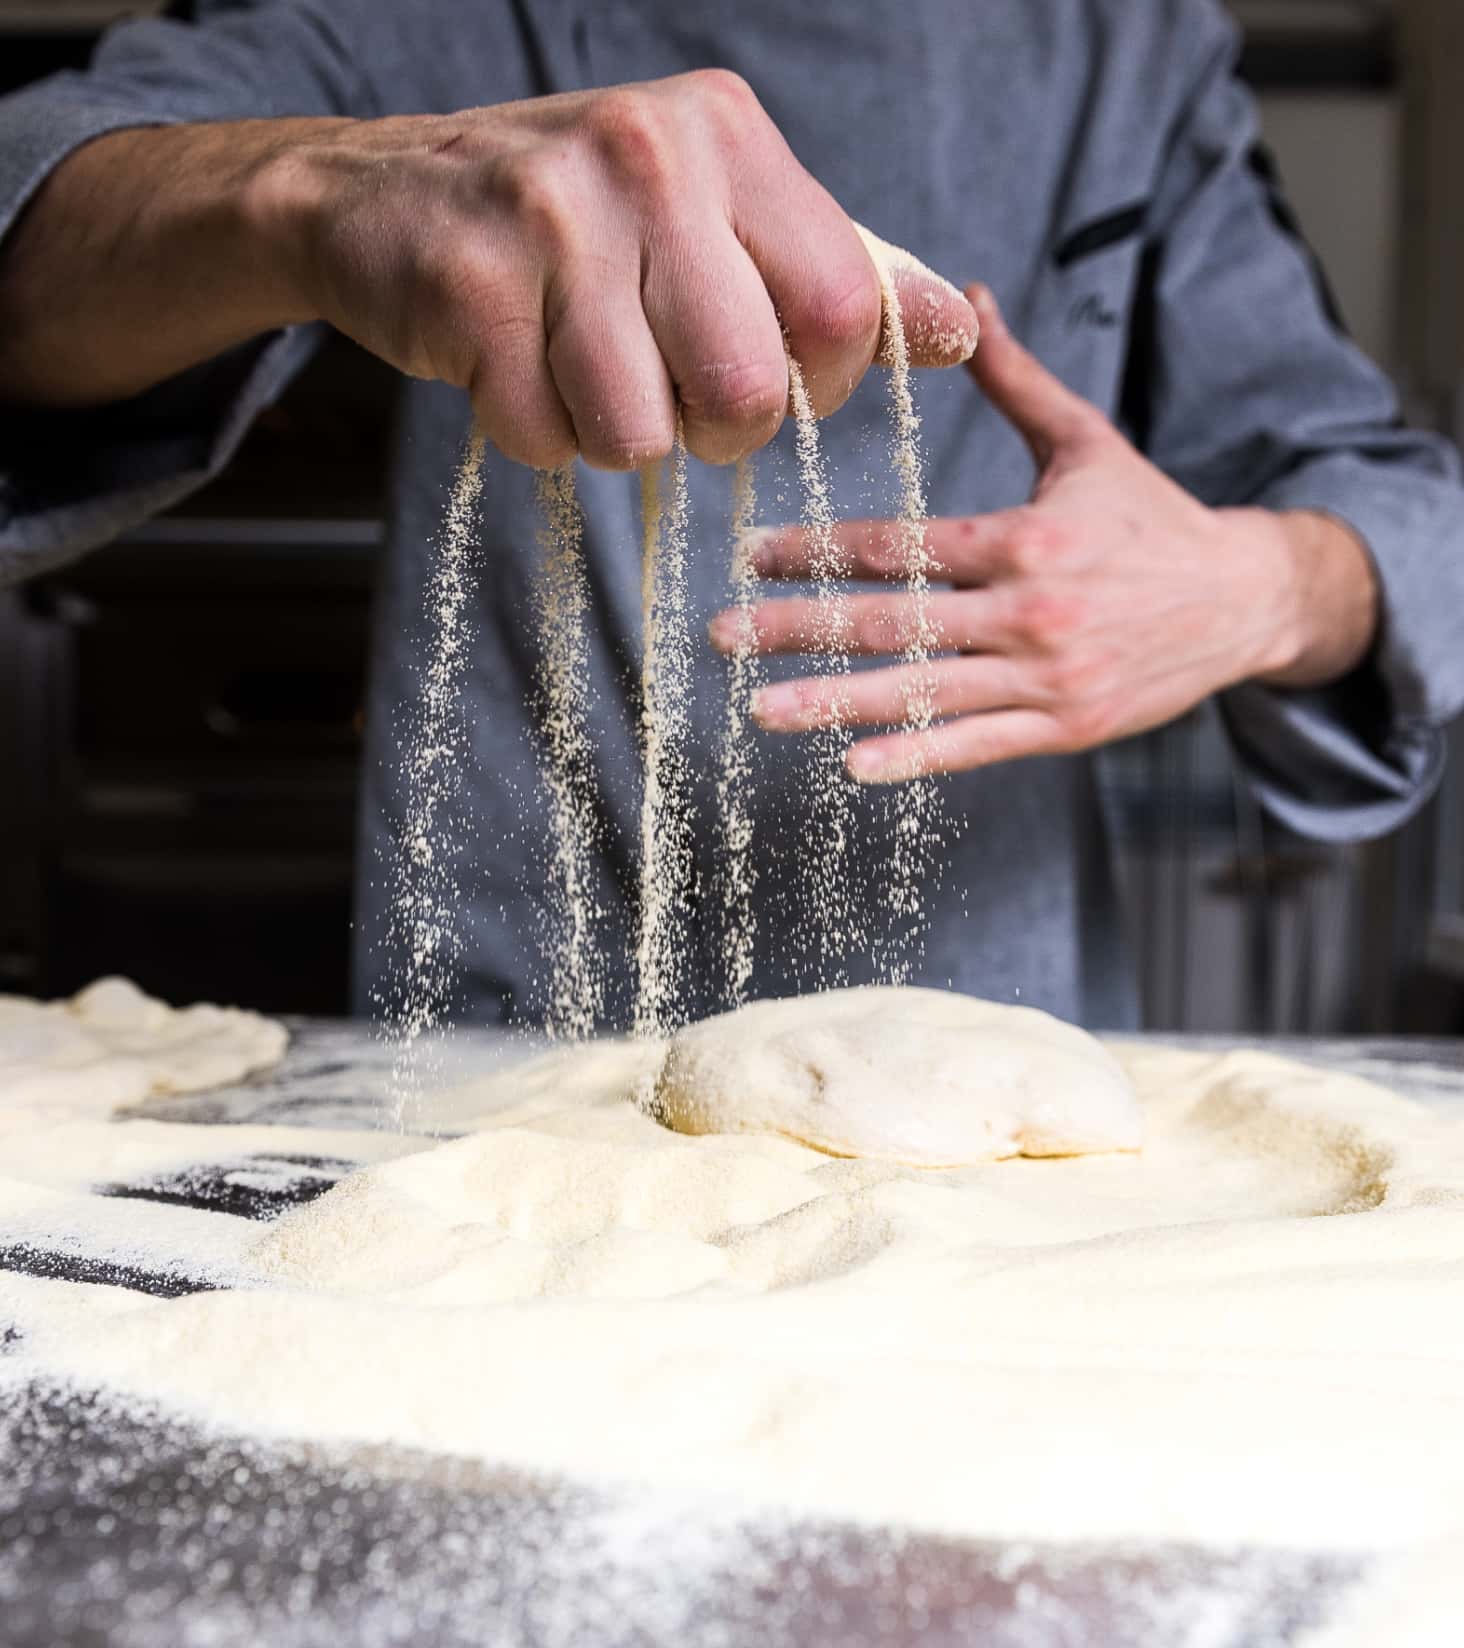 Detail of a cook's hand spreading flour while preparing a Pinsa.